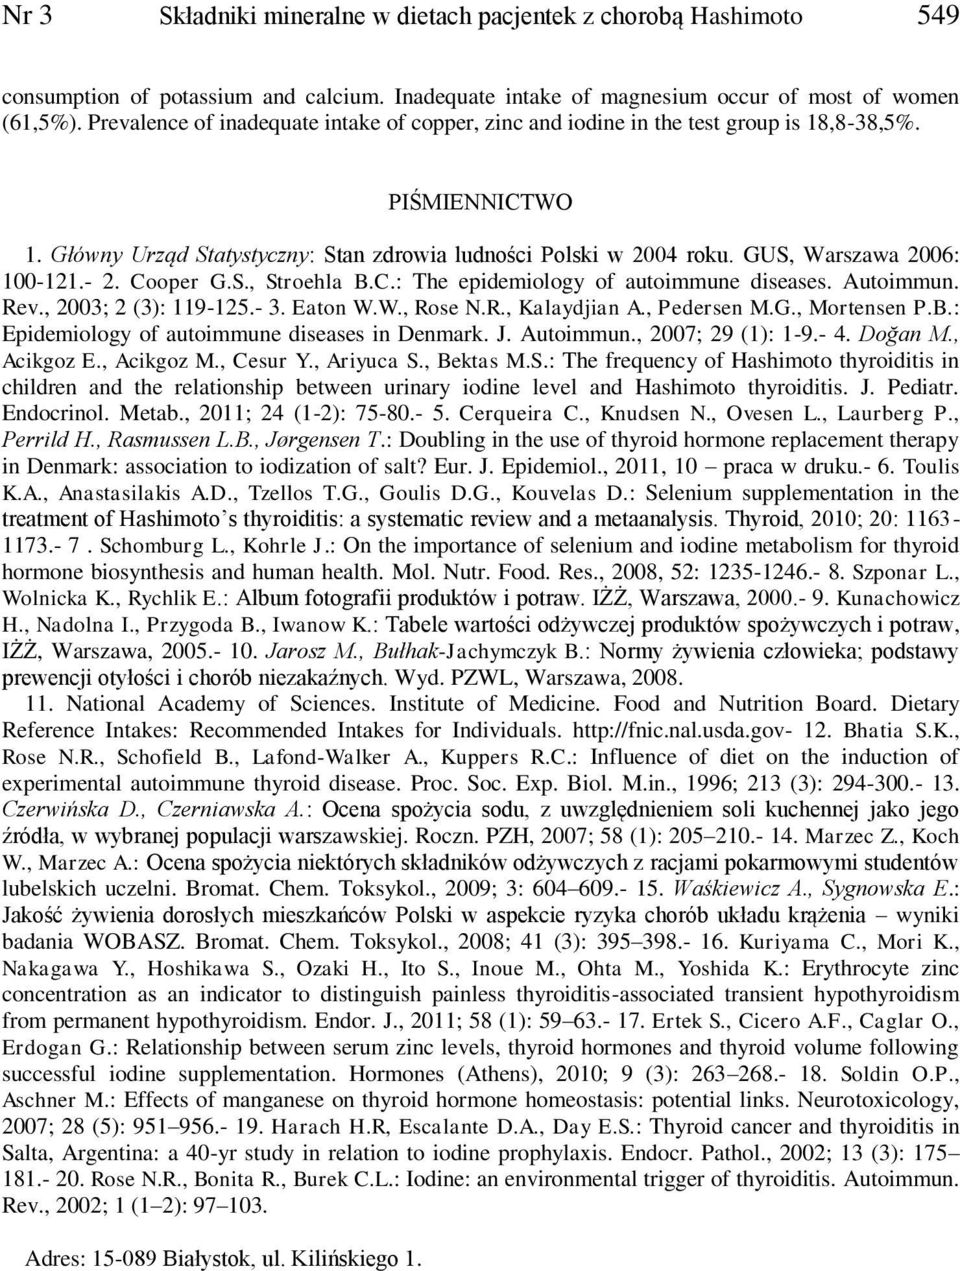 GUS, Warszawa 2006: 100-121.- 2. Cooper G.S., Stroehla B.C.: The epidemiology of autoimmune diseases. Autoimmun. Rev., 2003; 2 (3): 119-125.- 3. Eaton W.W., Rose N.R., Kalaydjian A., Pedersen M.G., Mortensen P.